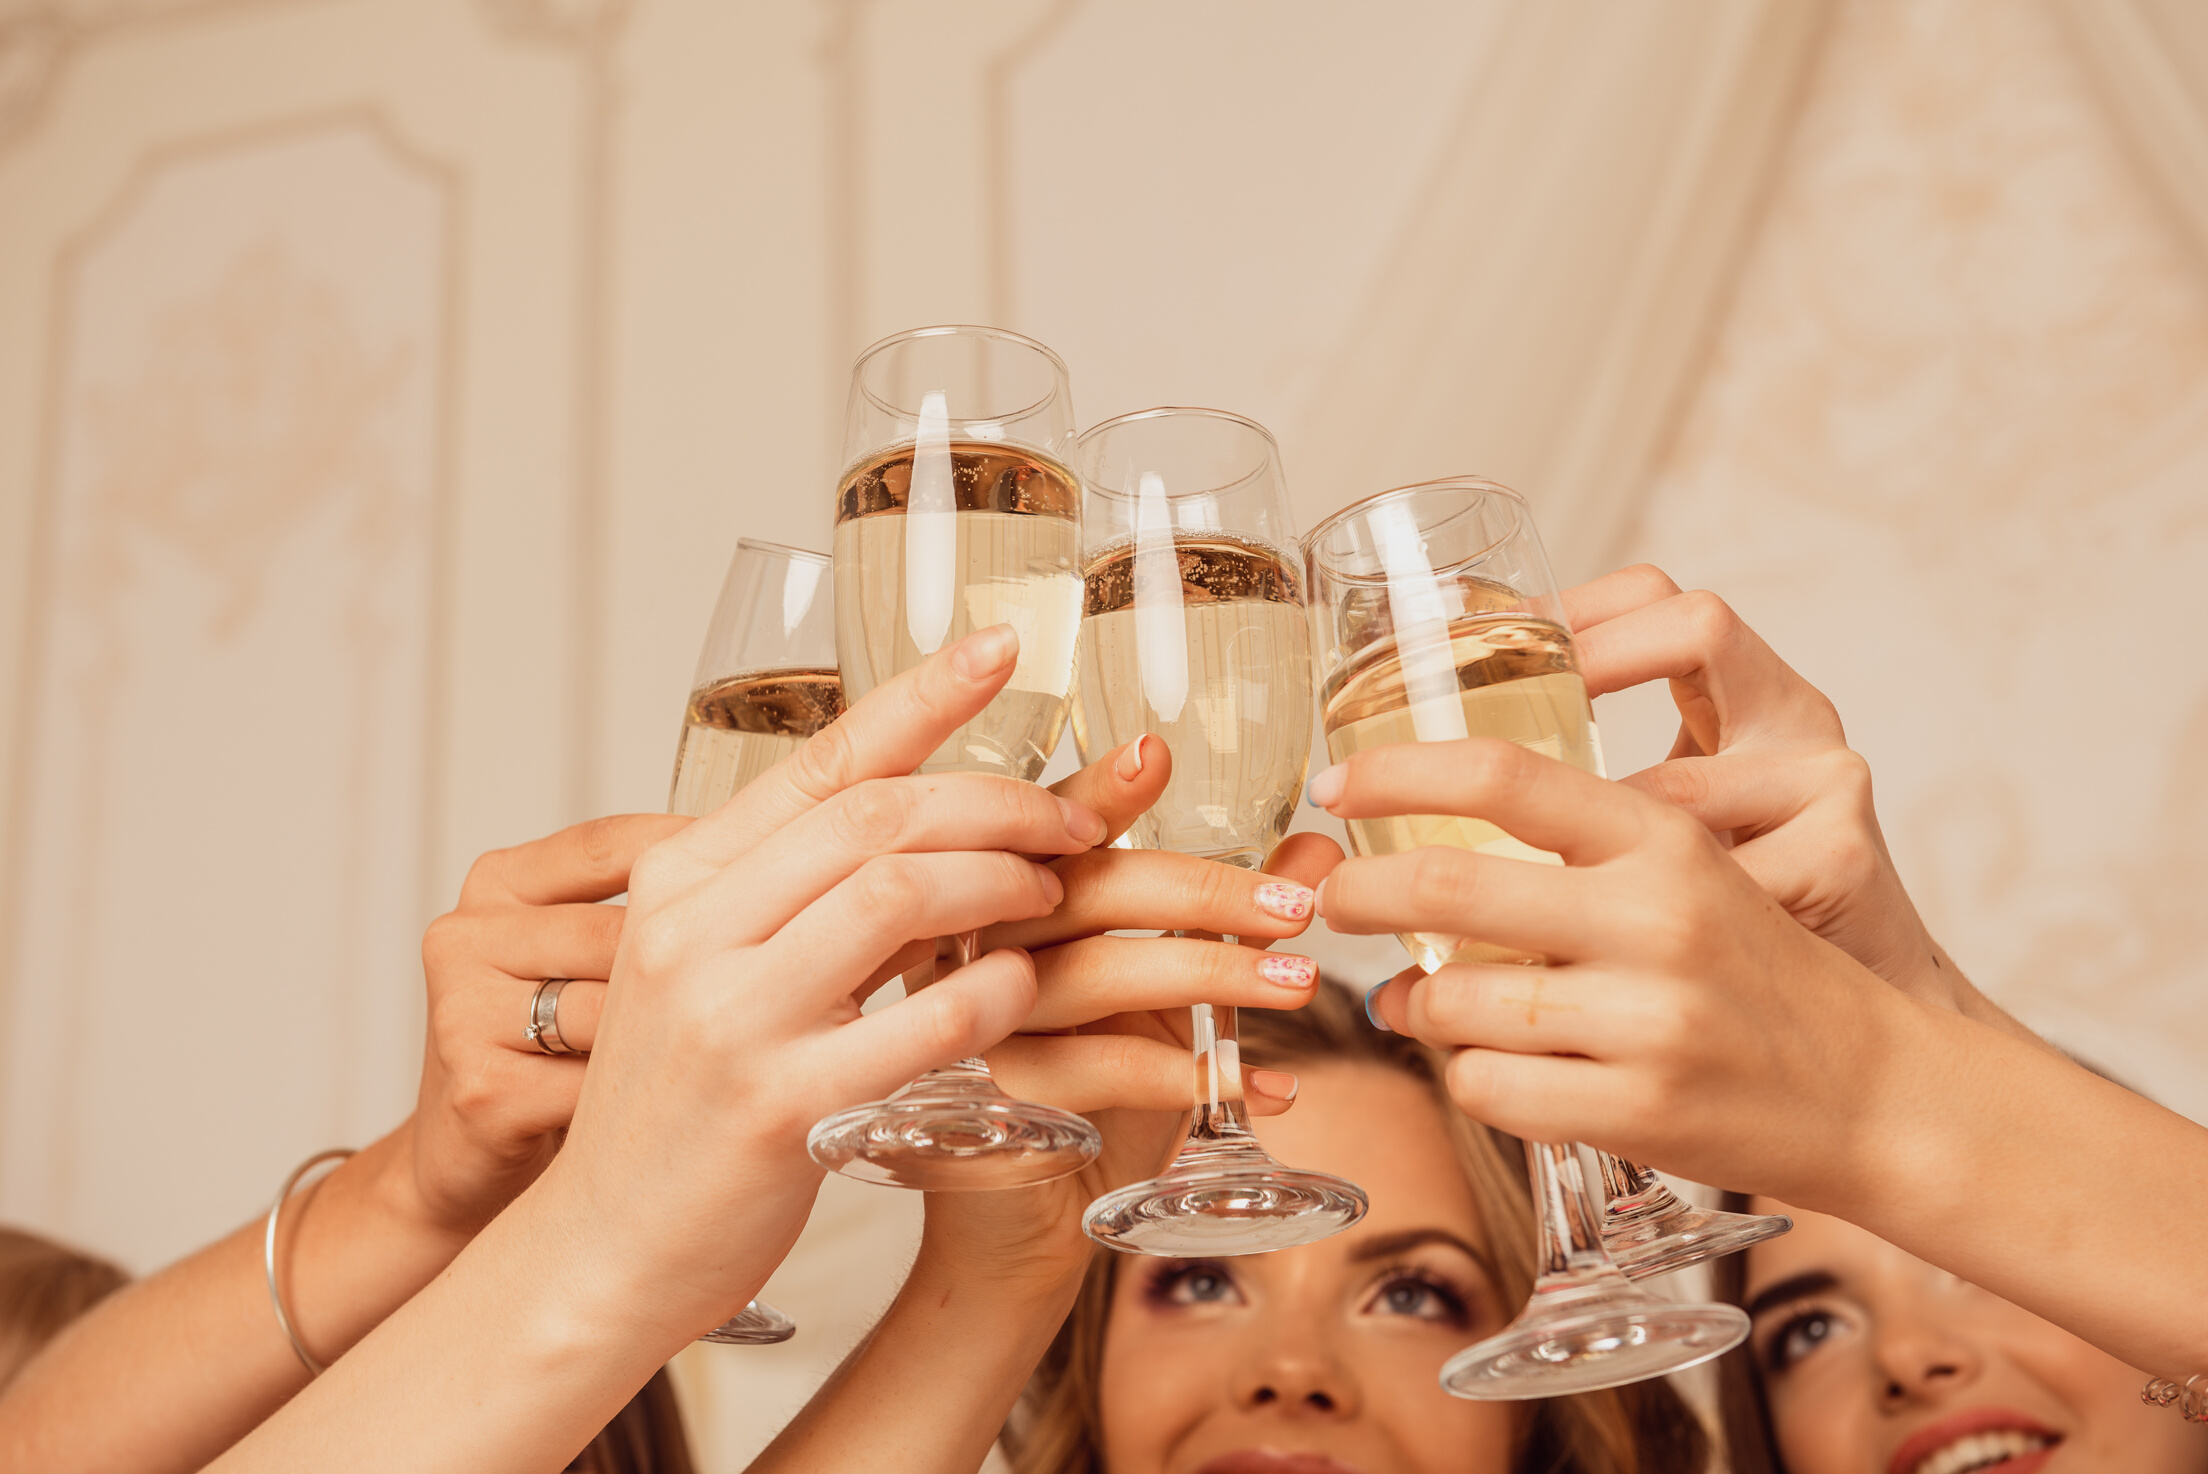 Girls celebrate a bachelorette party of bride